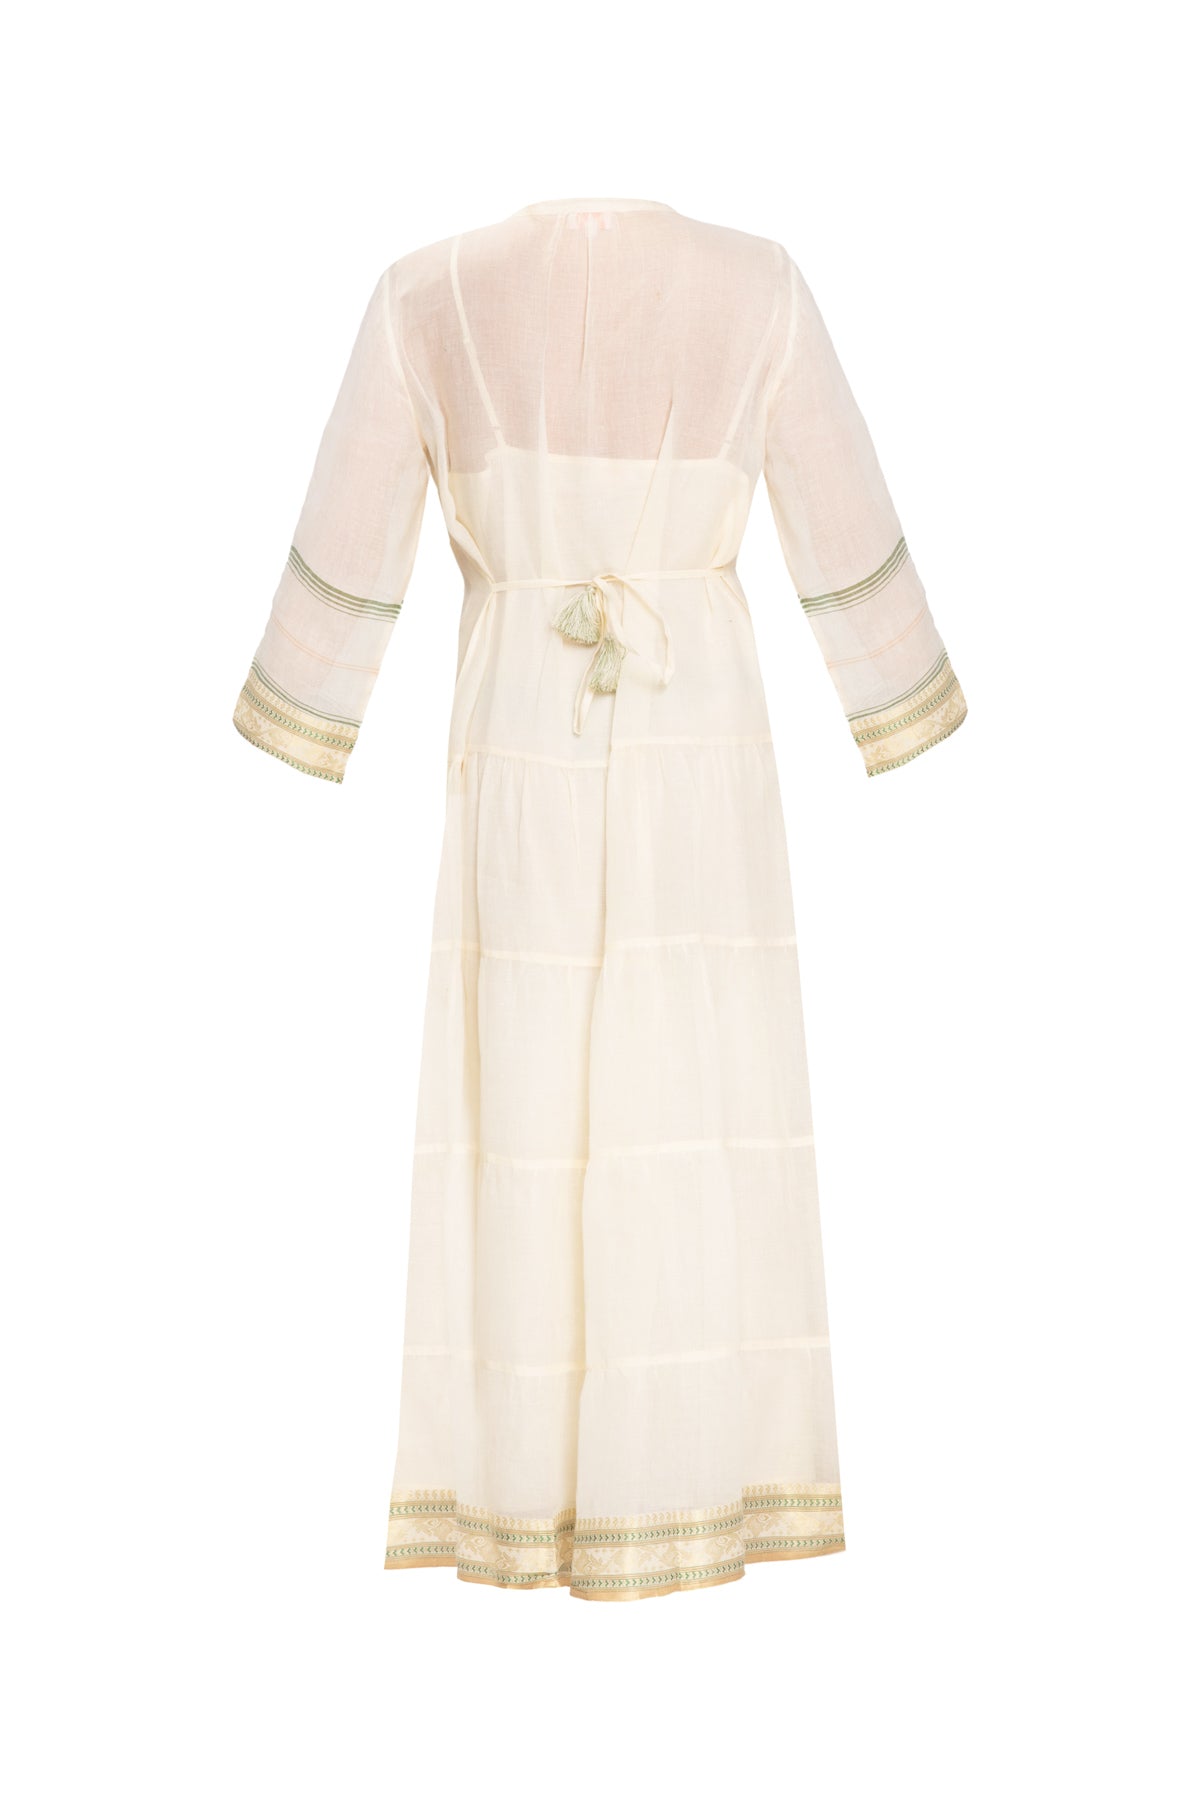 Longfrill Cotton Dress - Cream & Olive